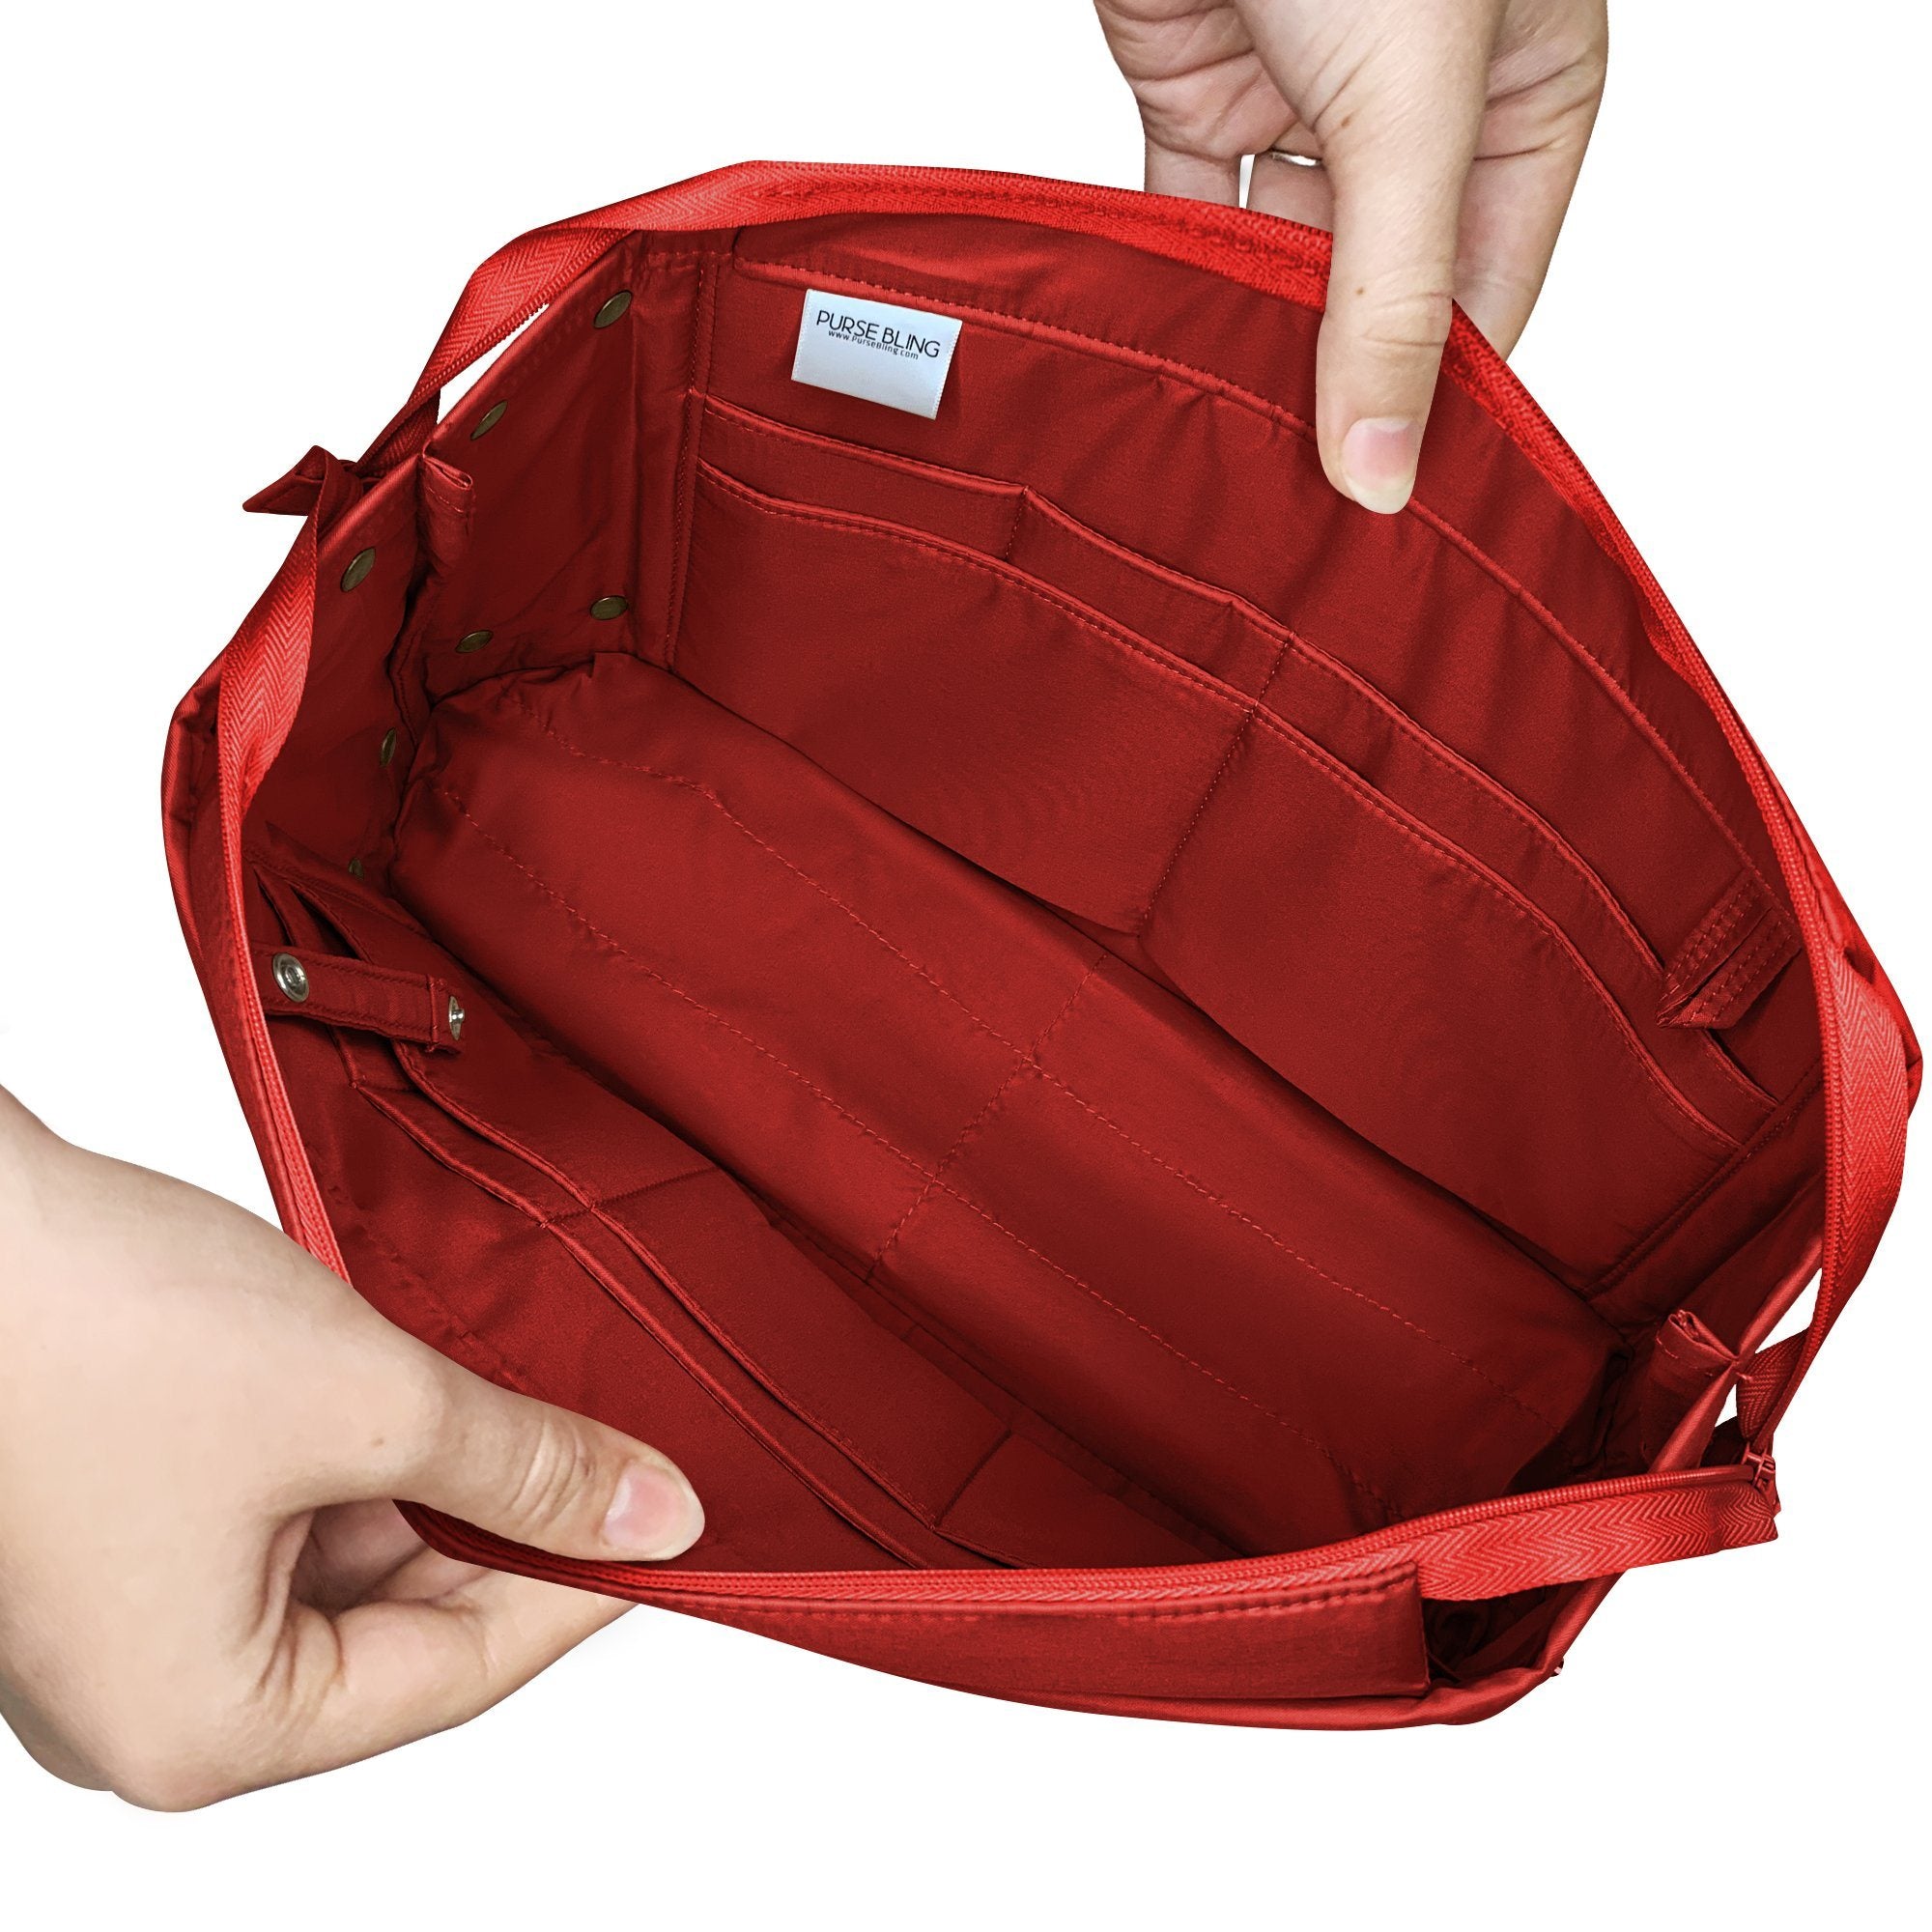 Louis Vuitton Speedy Bandoulière Organizer Insert, Classic Model Bag Organizer with iPad Pocket